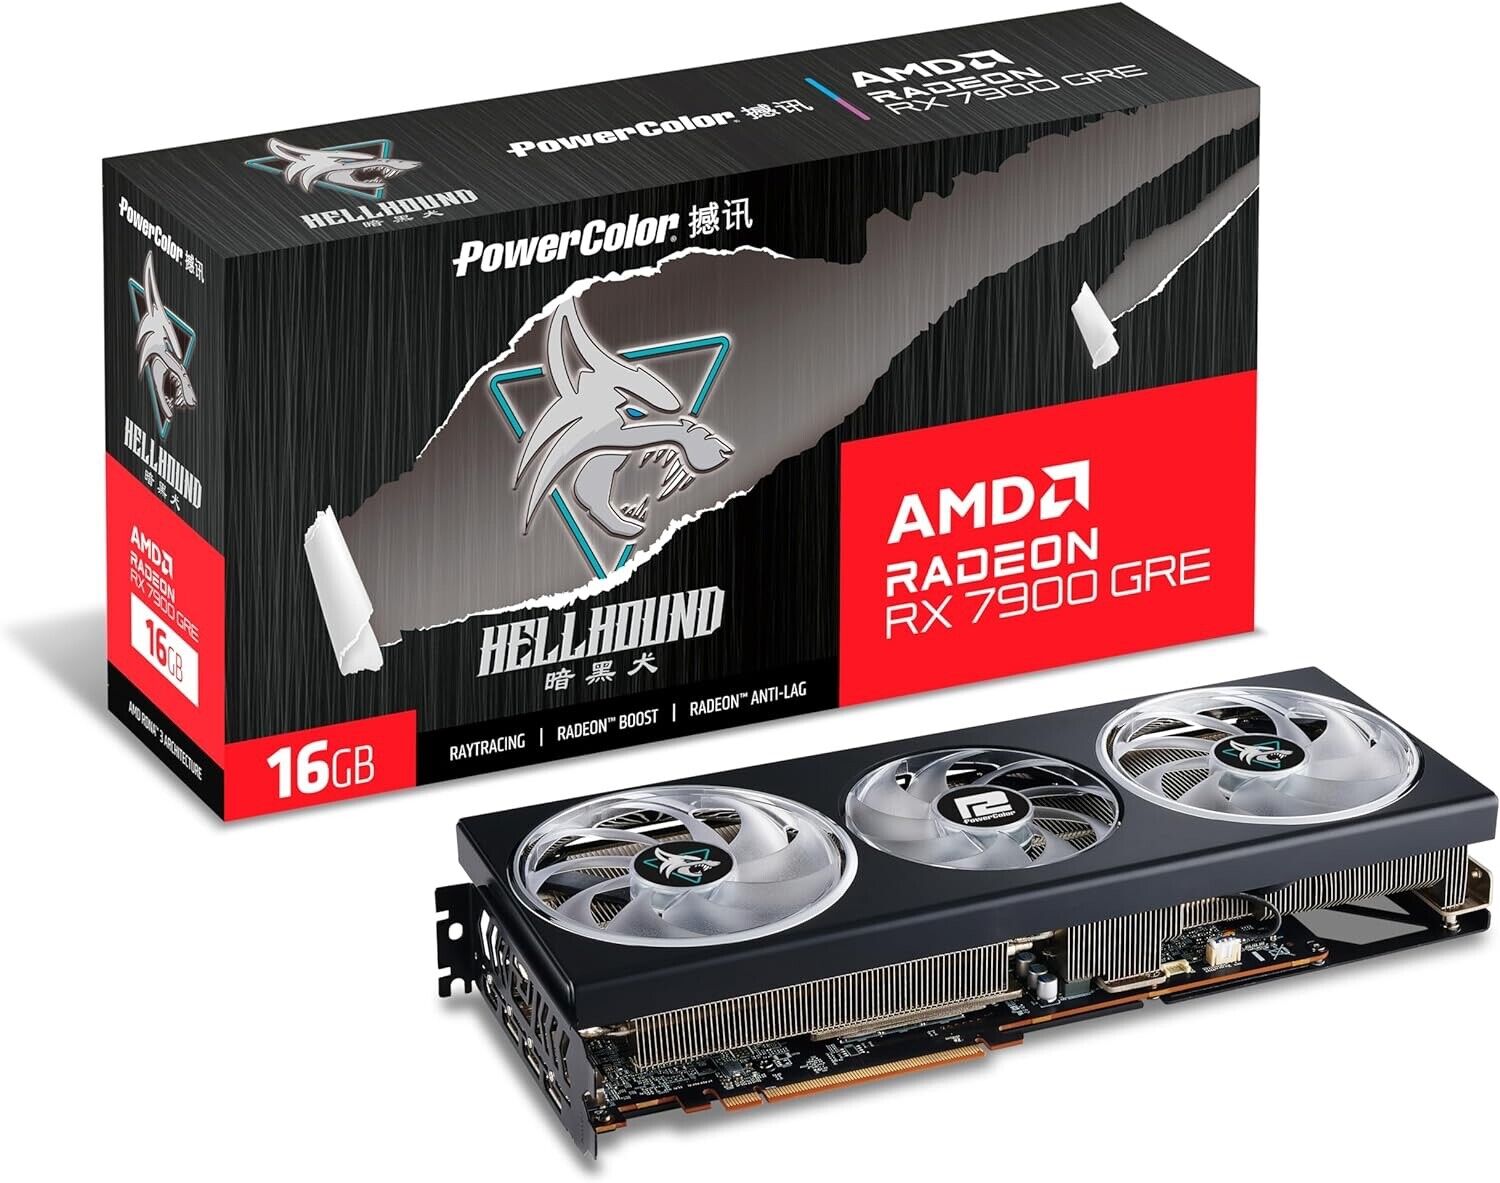 PowerColor Hellhound AMD Radeon RX 7900 GRE Graphics Card 16GB GDDR6 New